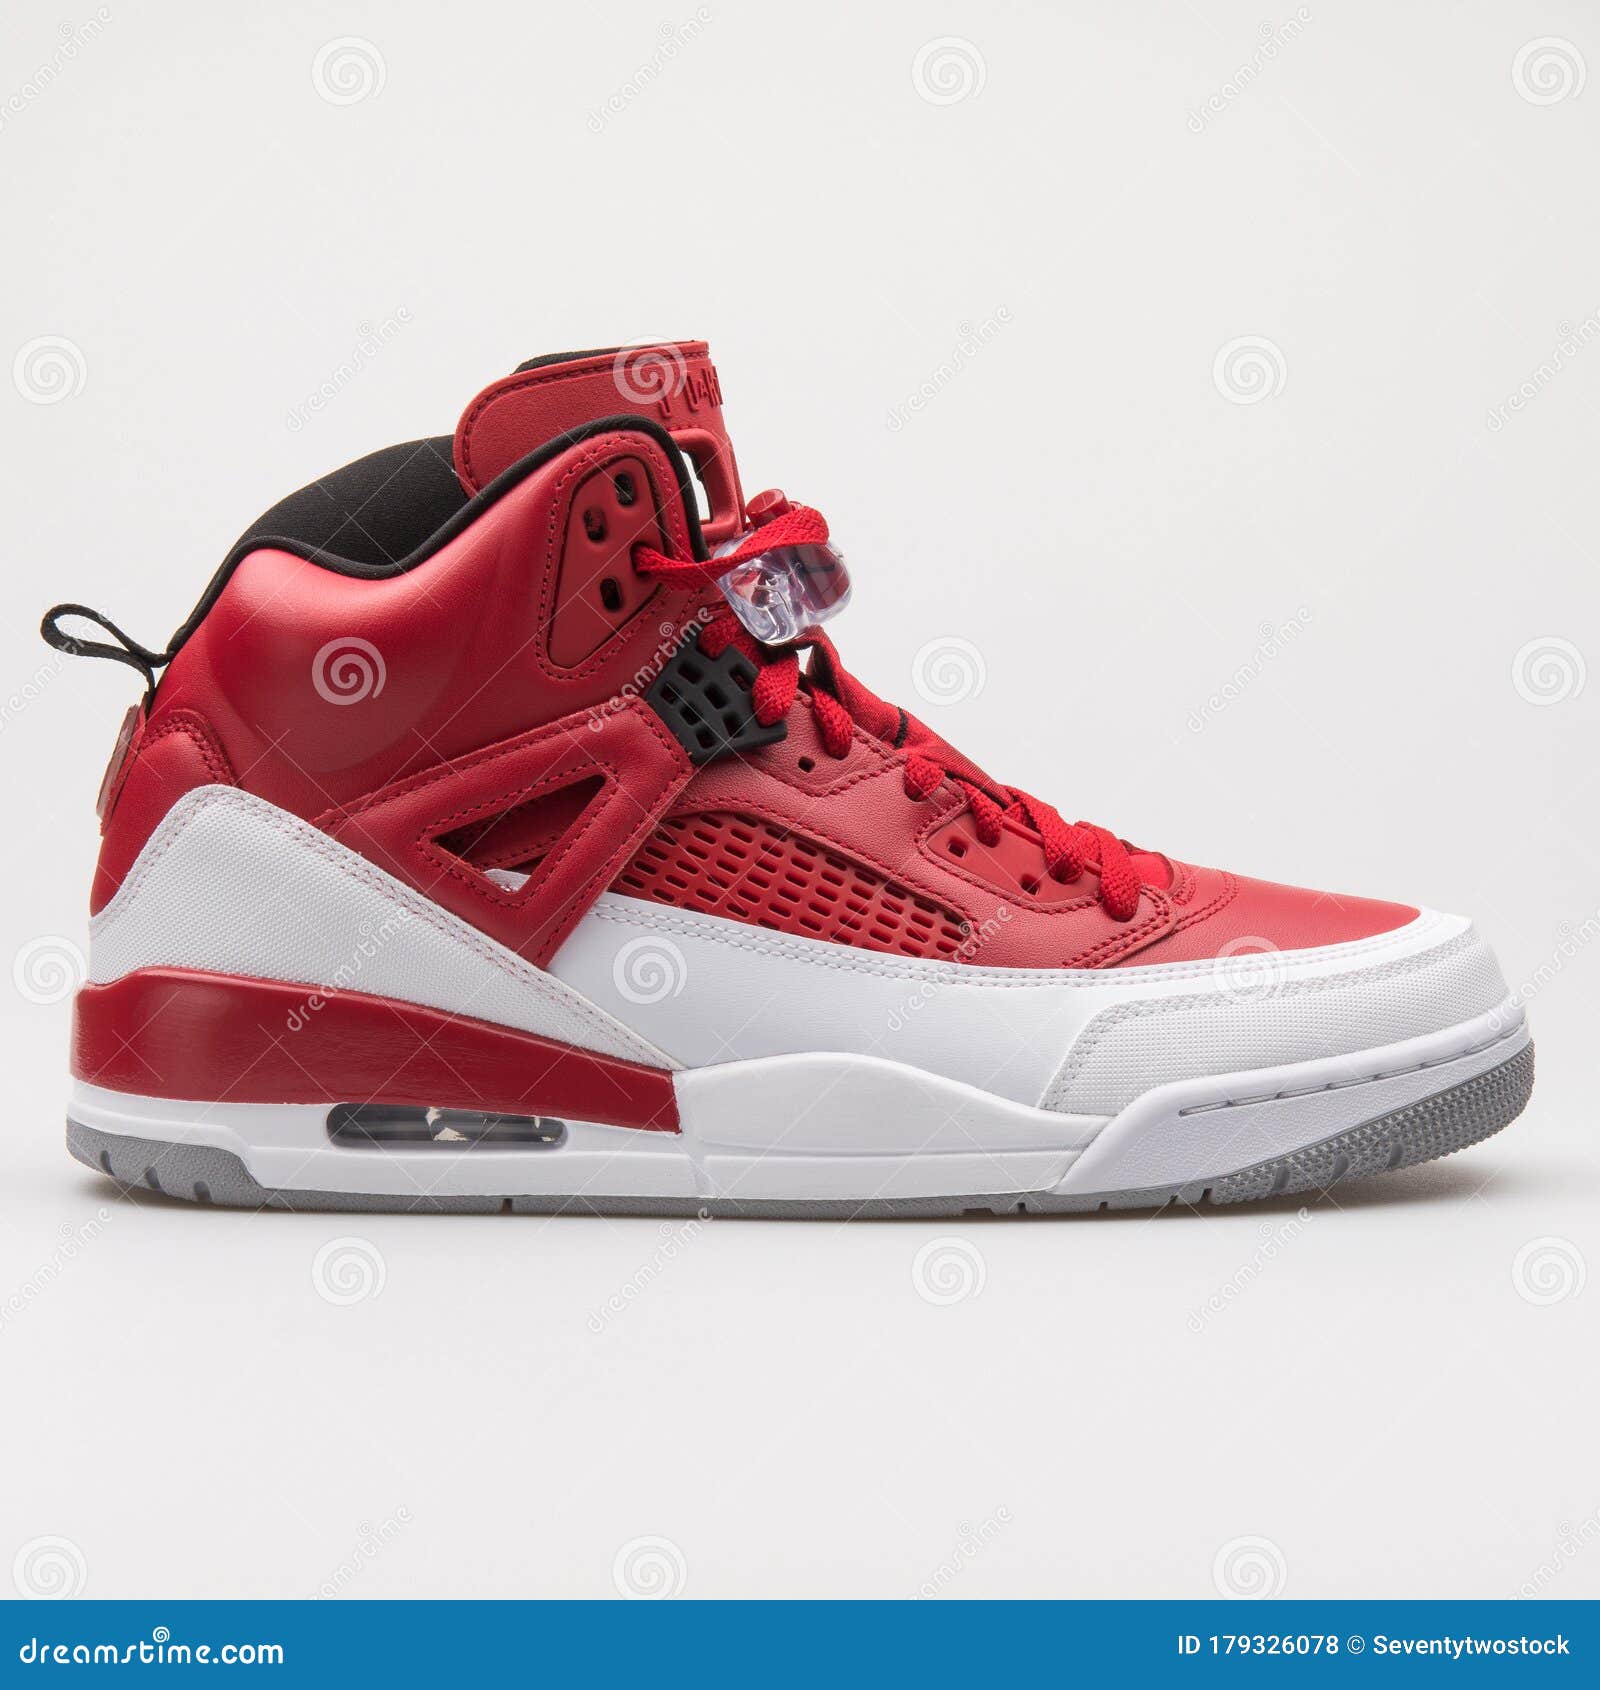 Nike Air Jordan Spizike Red, White and Black Sneaker Editorial